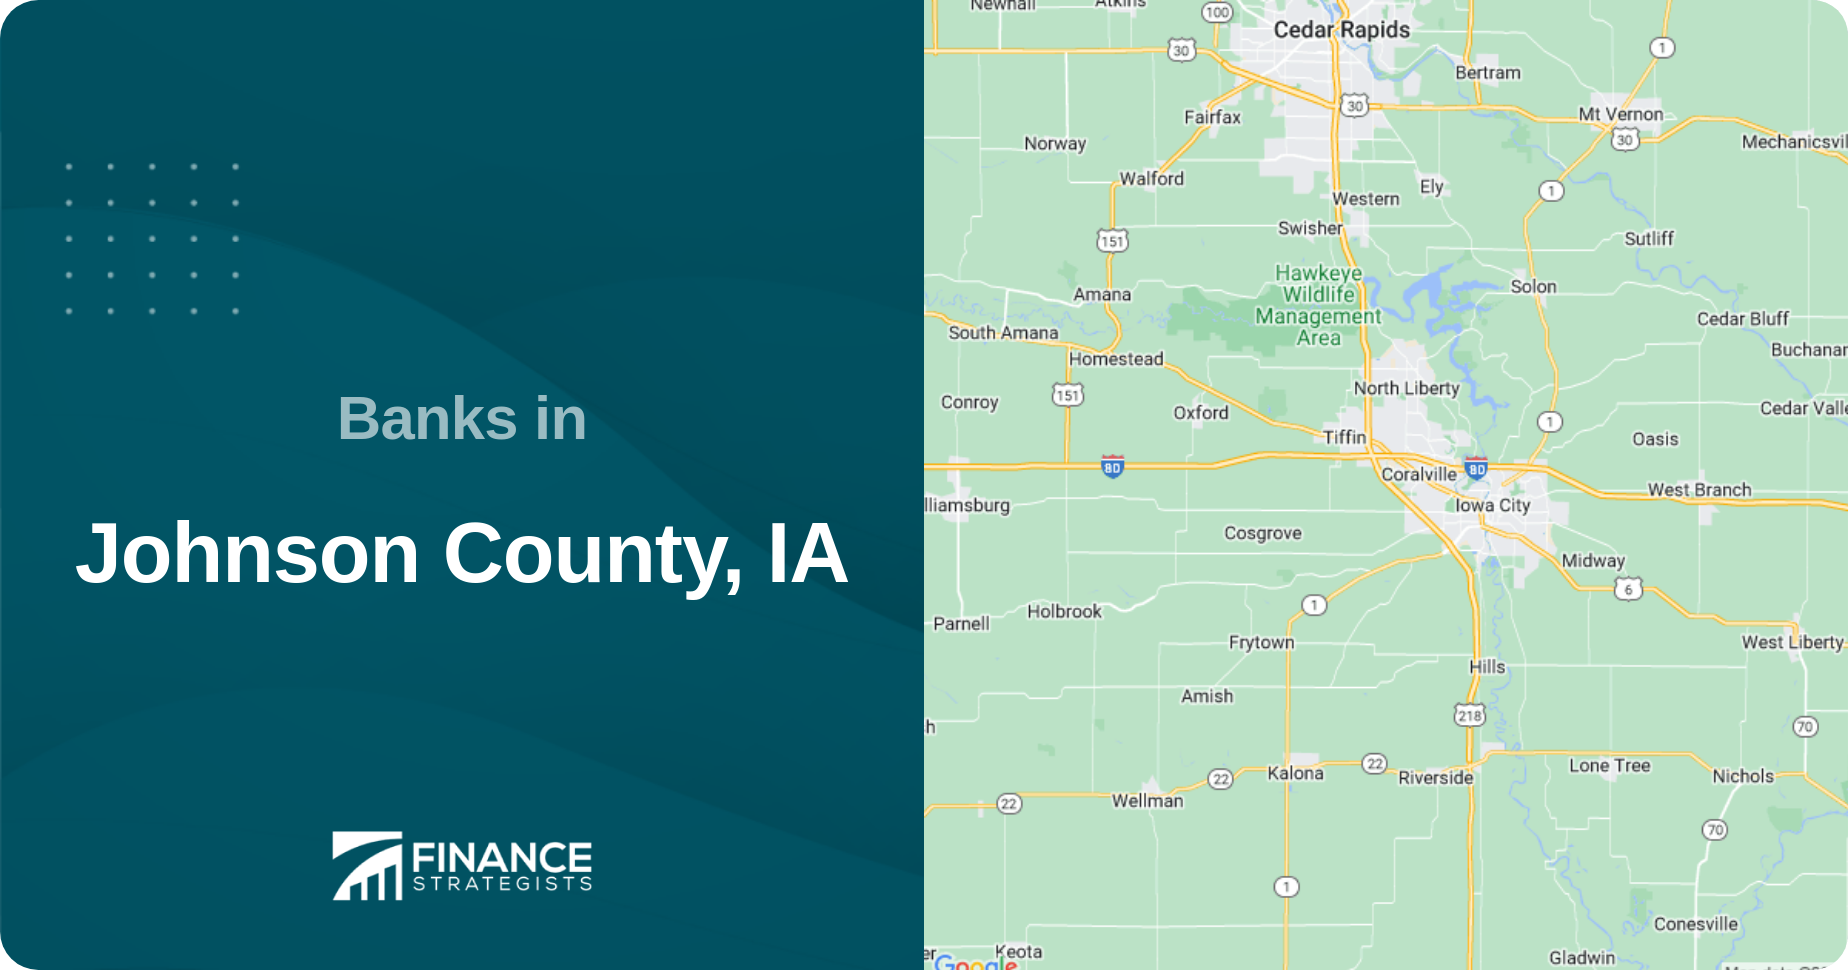 Banks in Johnson County, IA